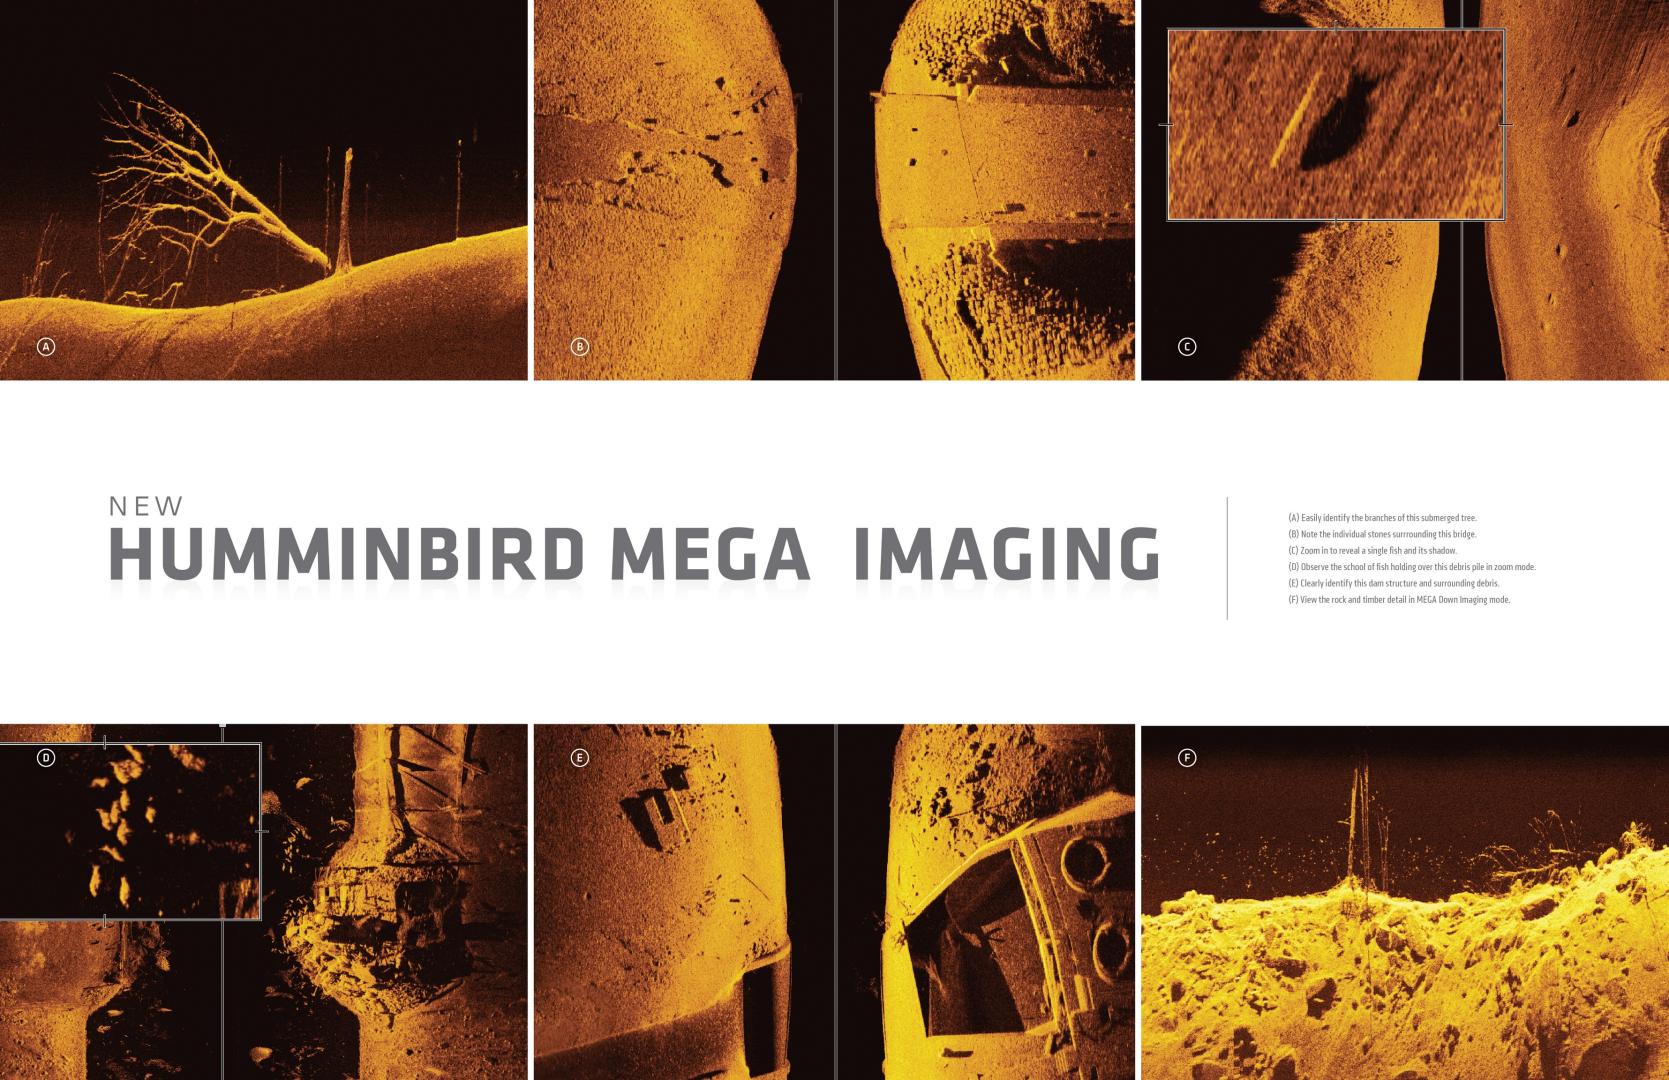 Pressmare  Fishfinder: Humminbird Introduces MEGA Imaging at METSTRADE 2016